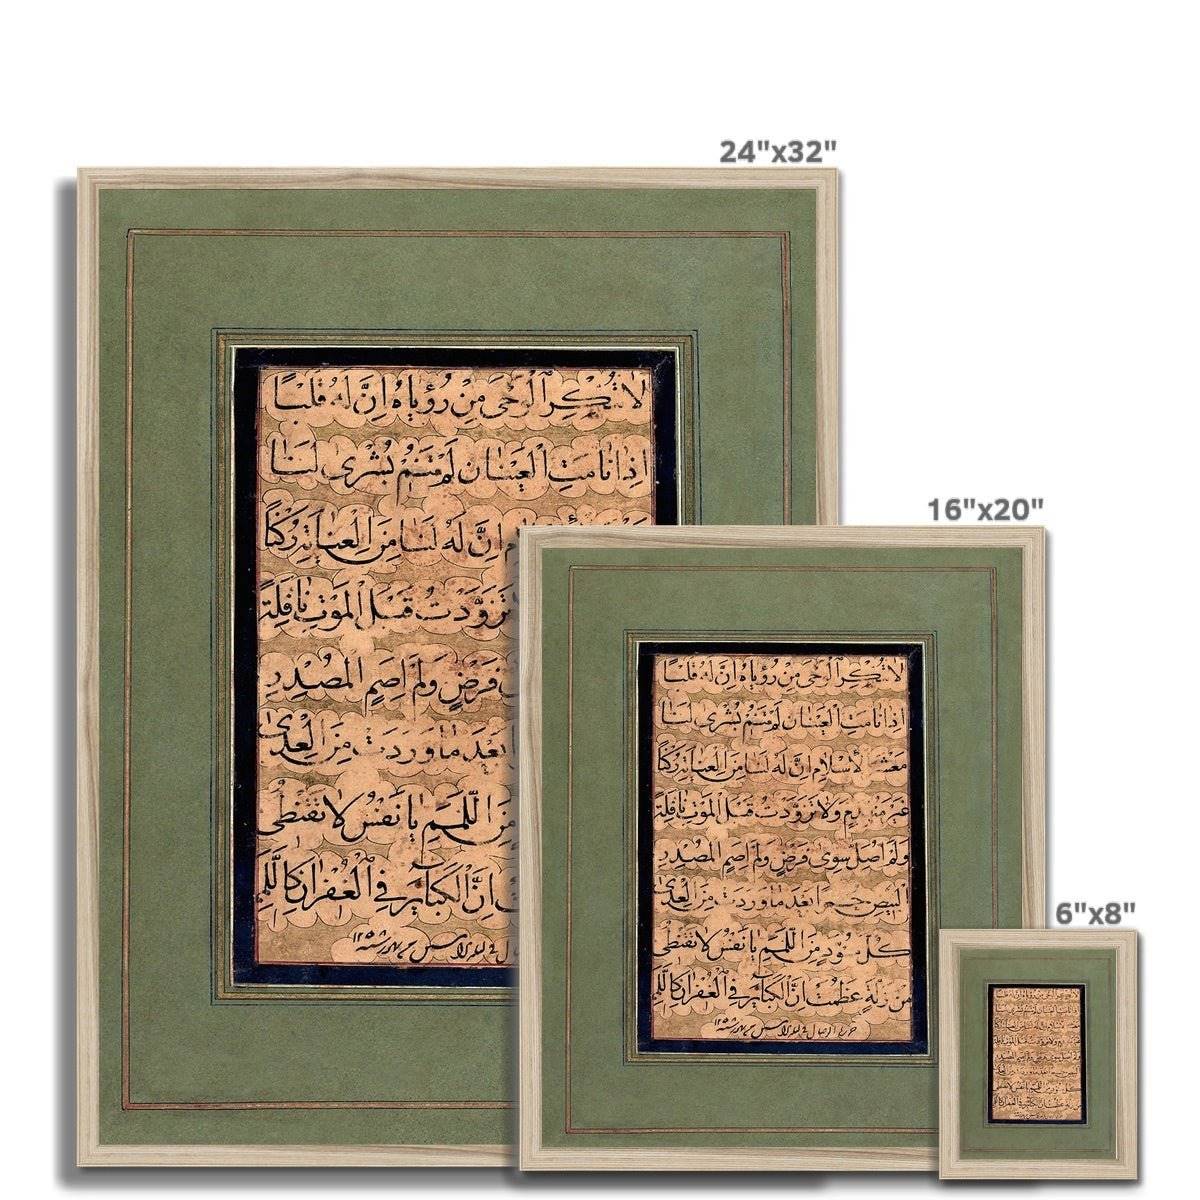 Arabic Poem of Divine Love | Vassal-i Shirazi Islamic Calligraphy | 19th Century Abstract Sufi (Rumi) Muslim Framed Art Print - Sacred Surreal